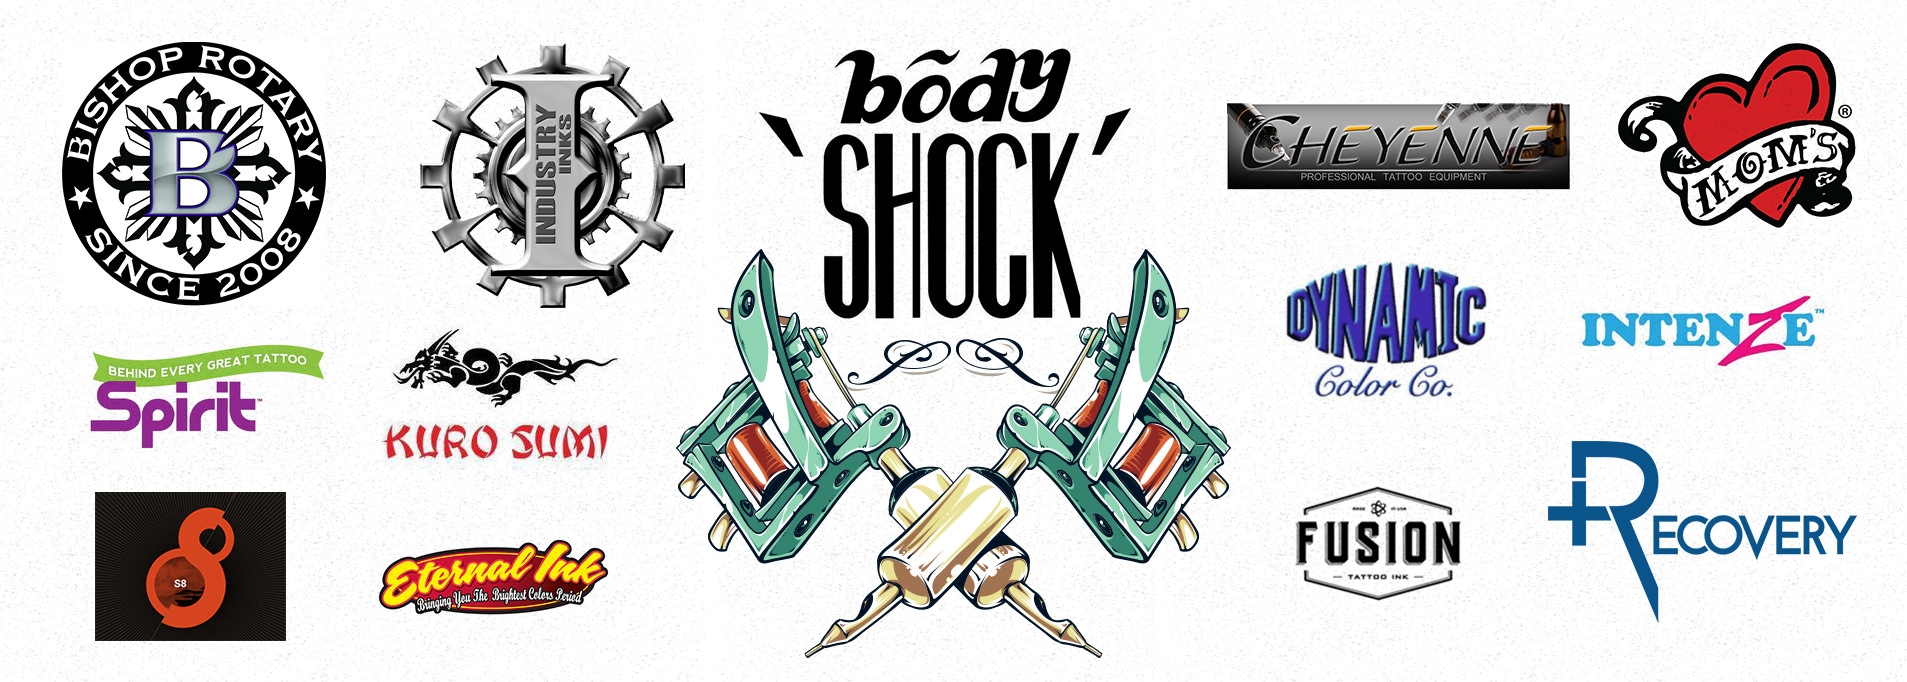 Body Shock Tattoo Supply Shop